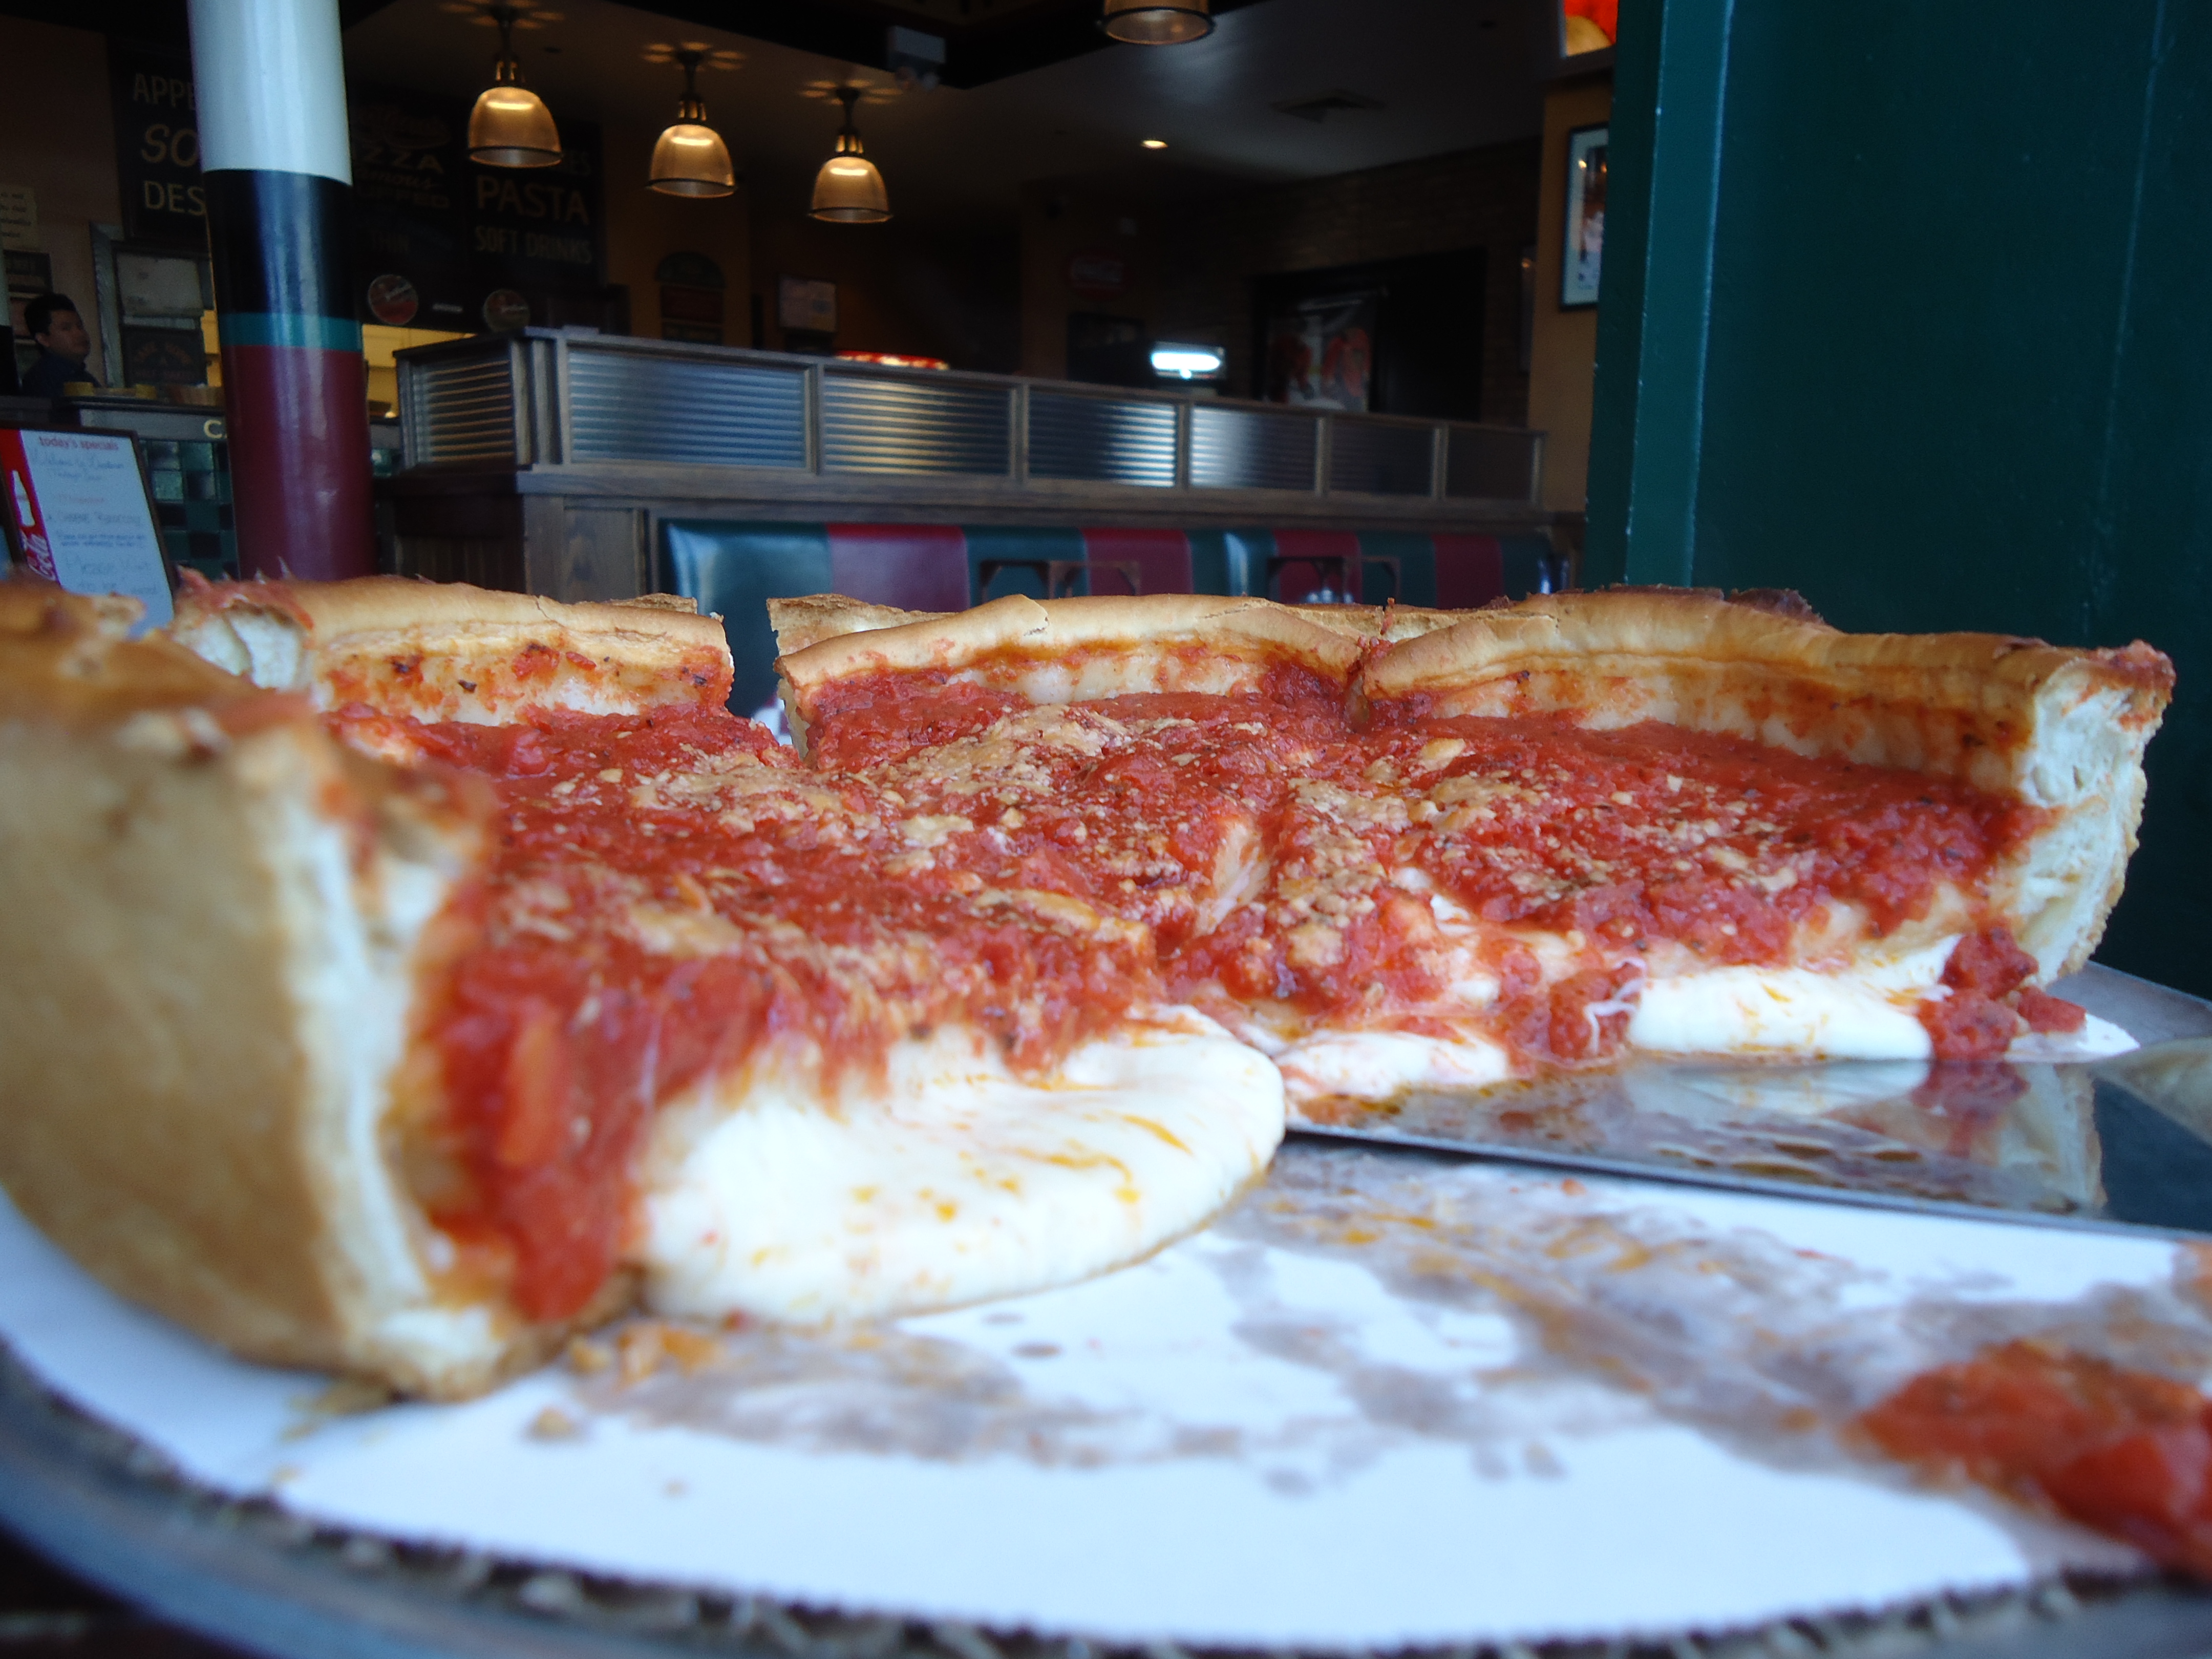 Giordano’s deep dish pizza, Chicago